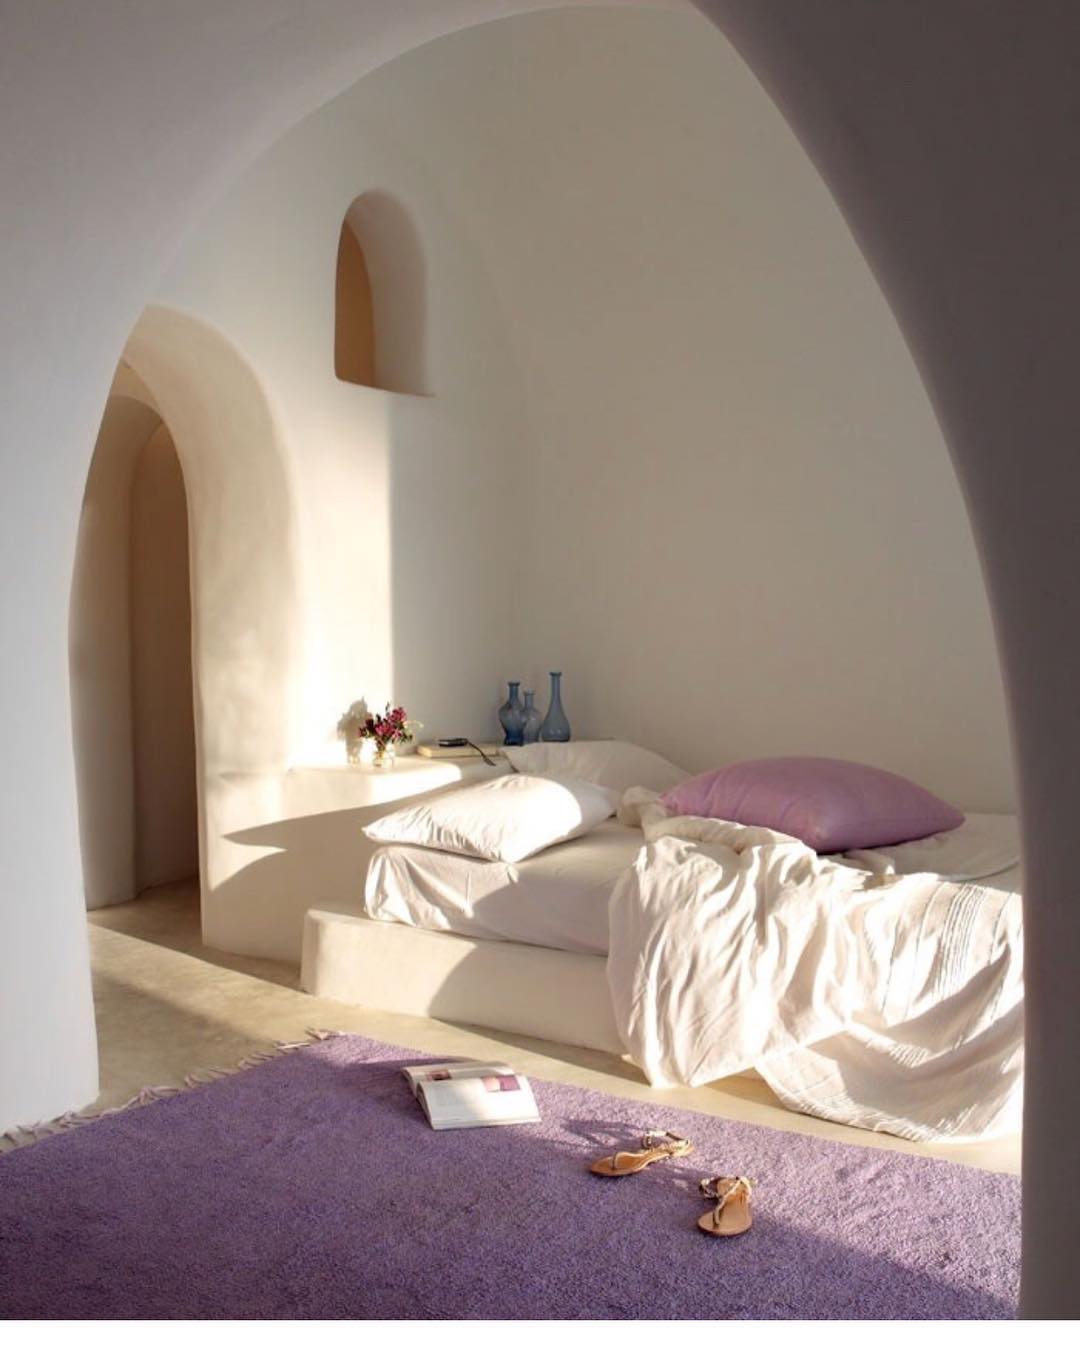 The Modern Mediterranean interior style unveils a warm face of minimalism.